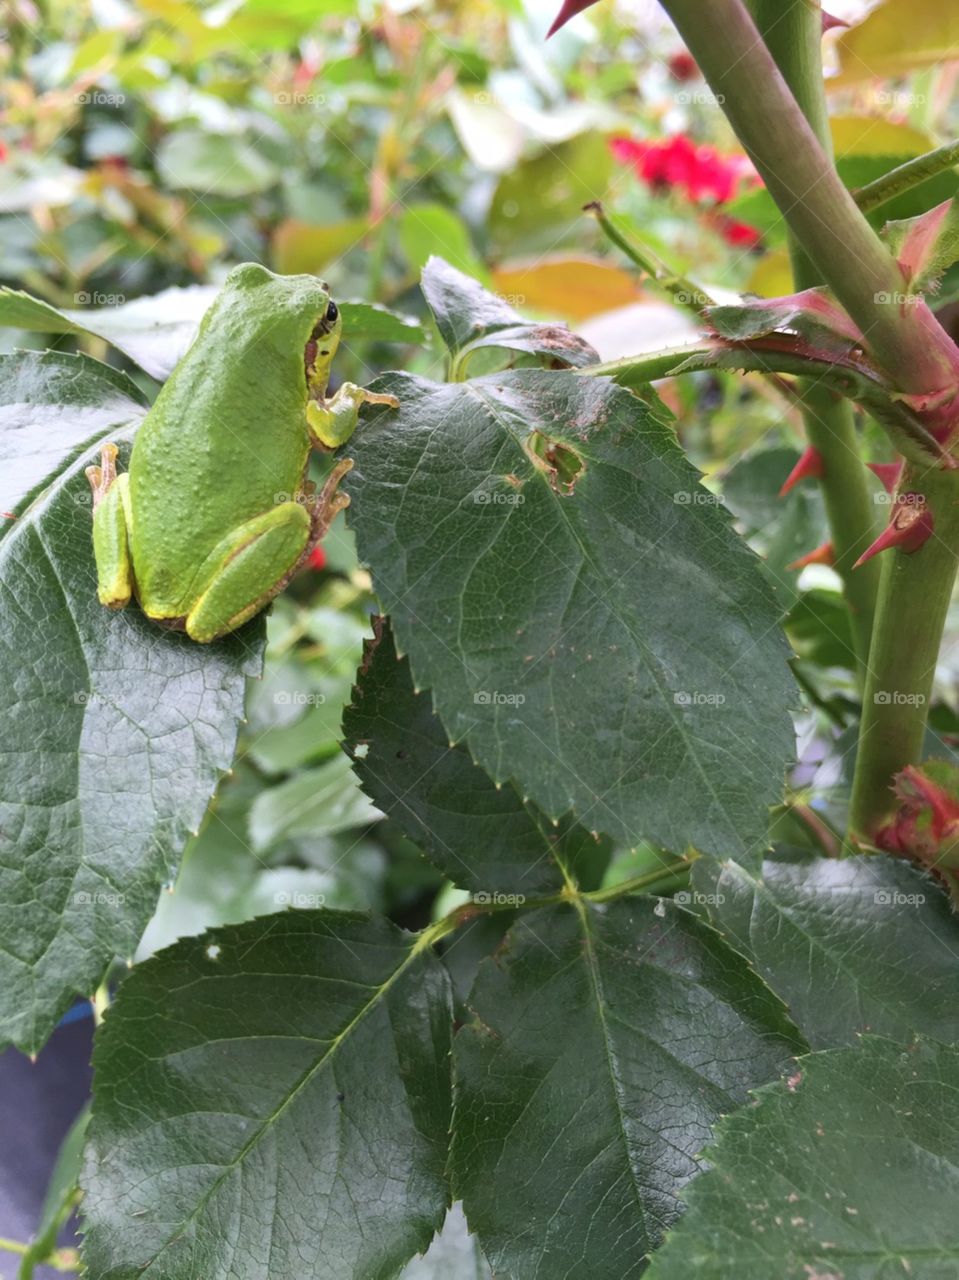 flog on the leaf